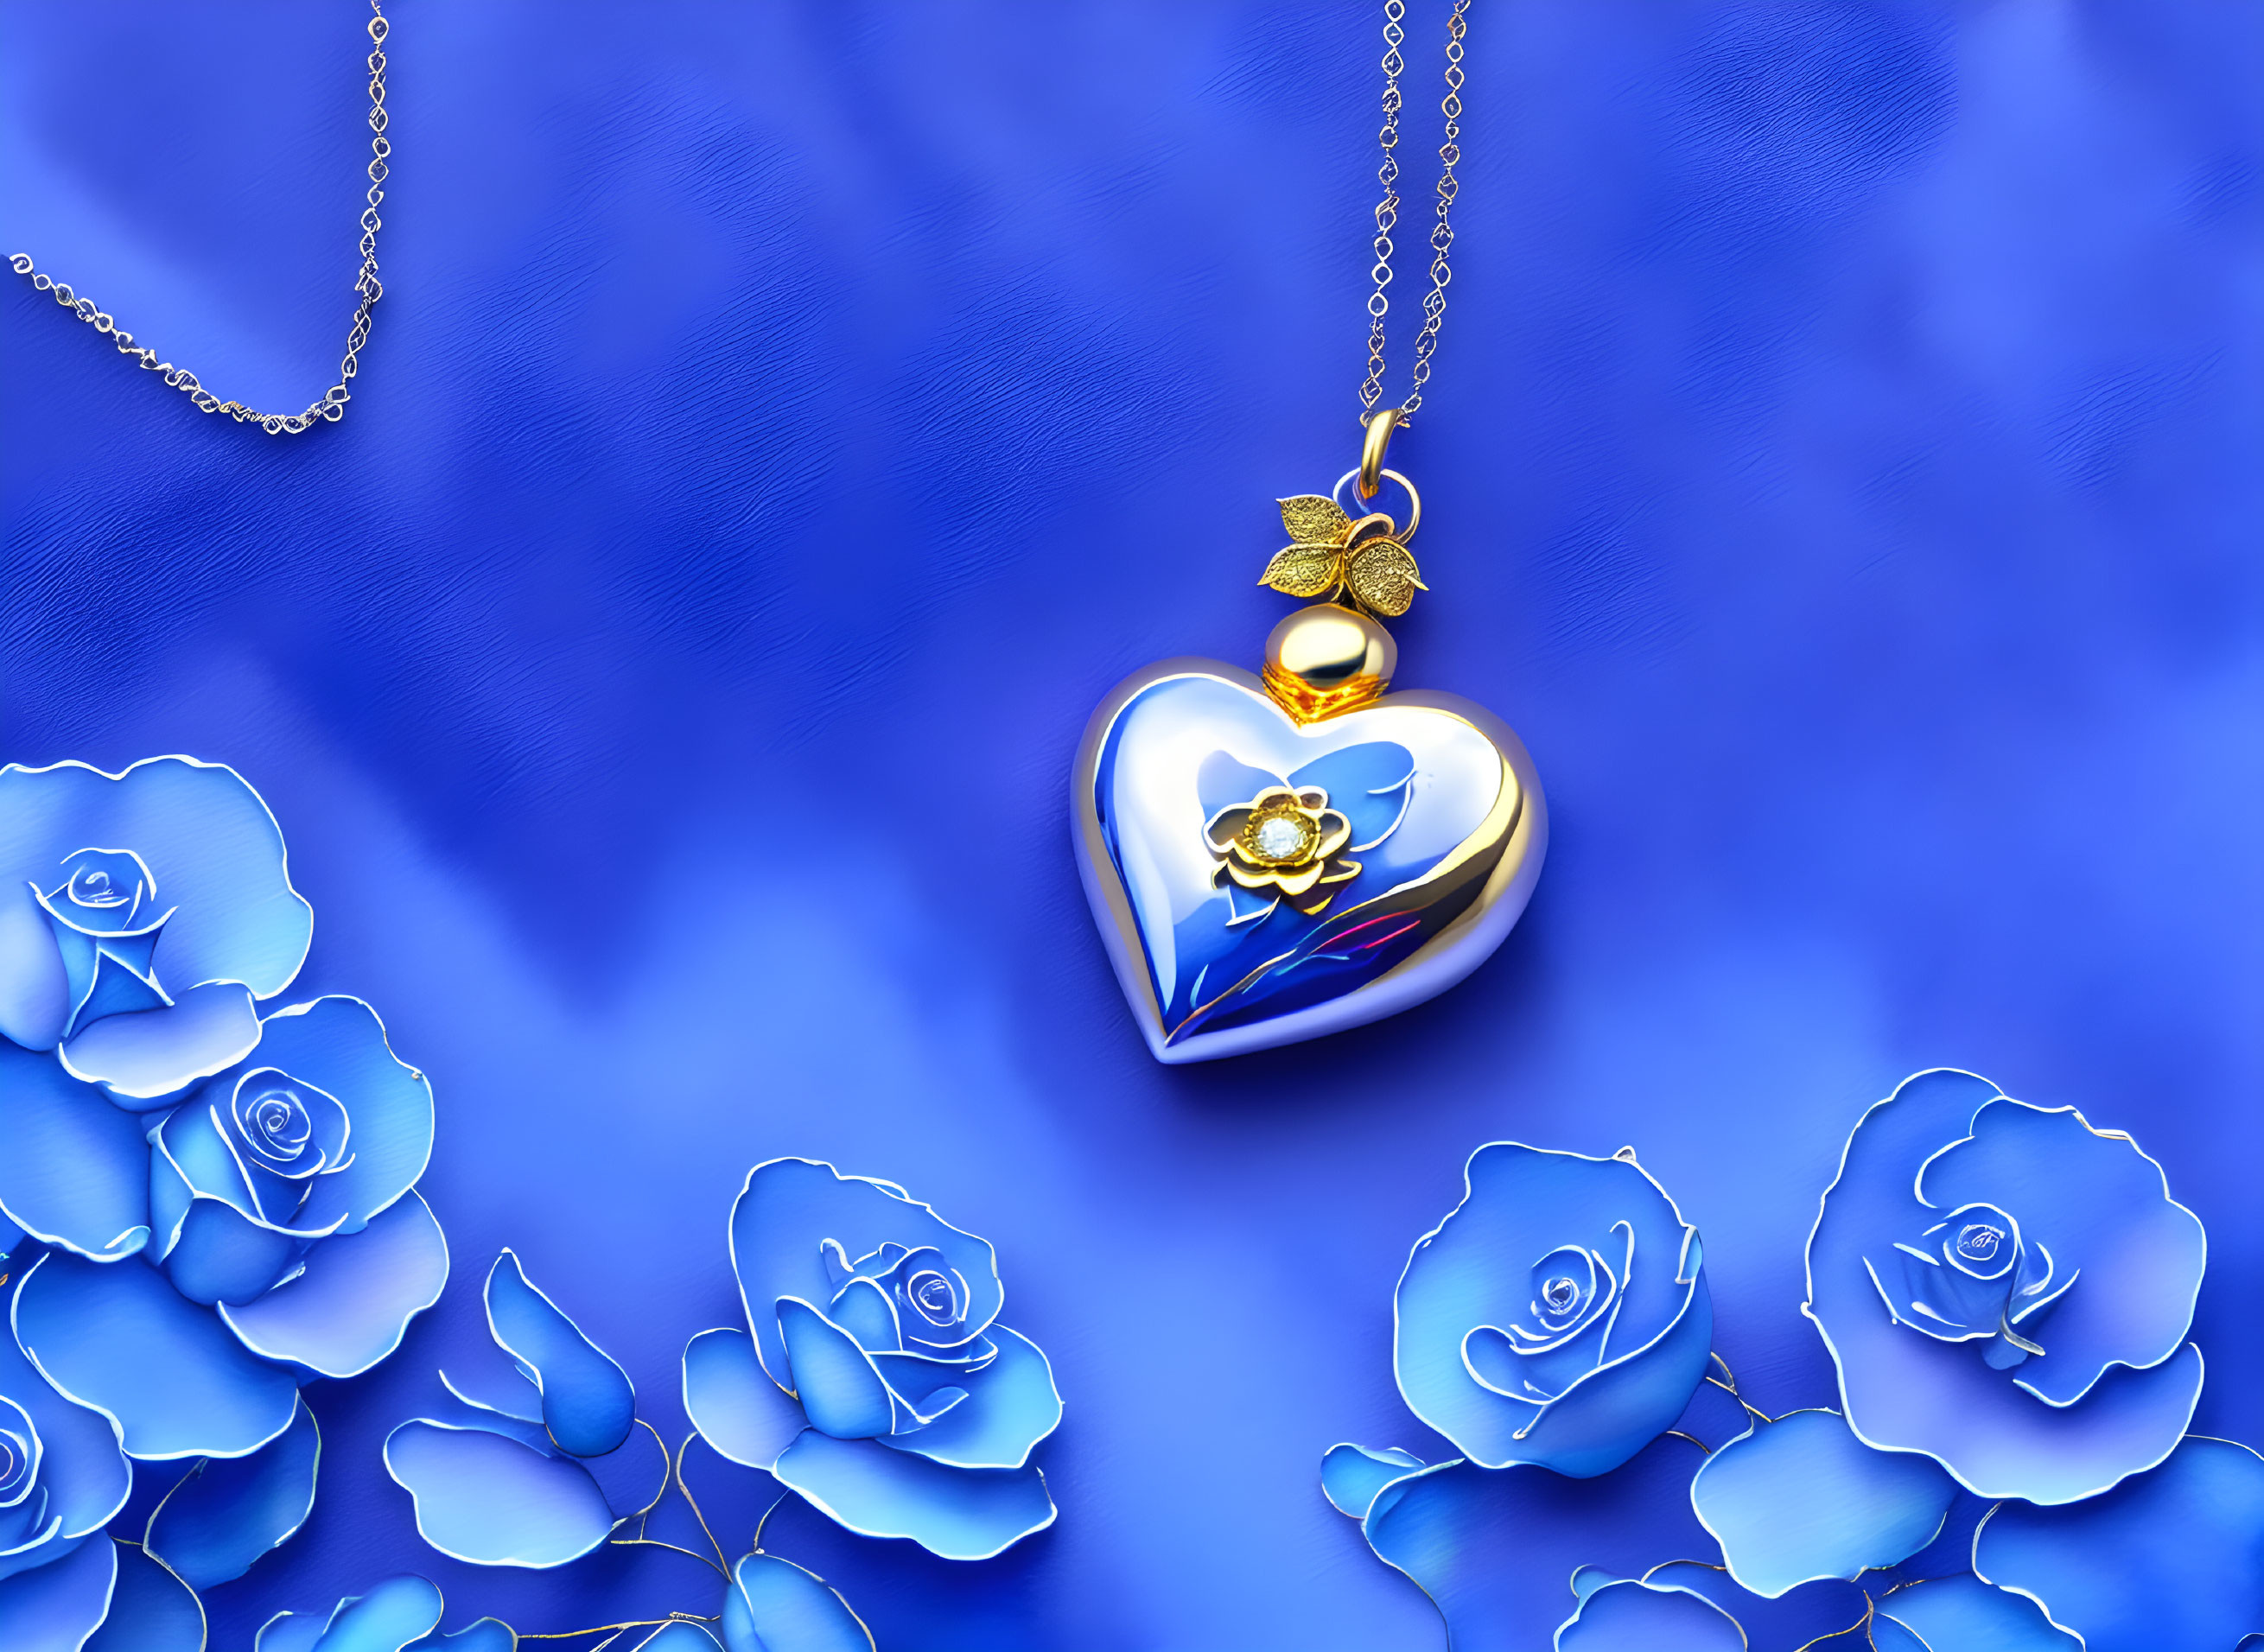 Enchanted Floral Pendant on Blue Silk